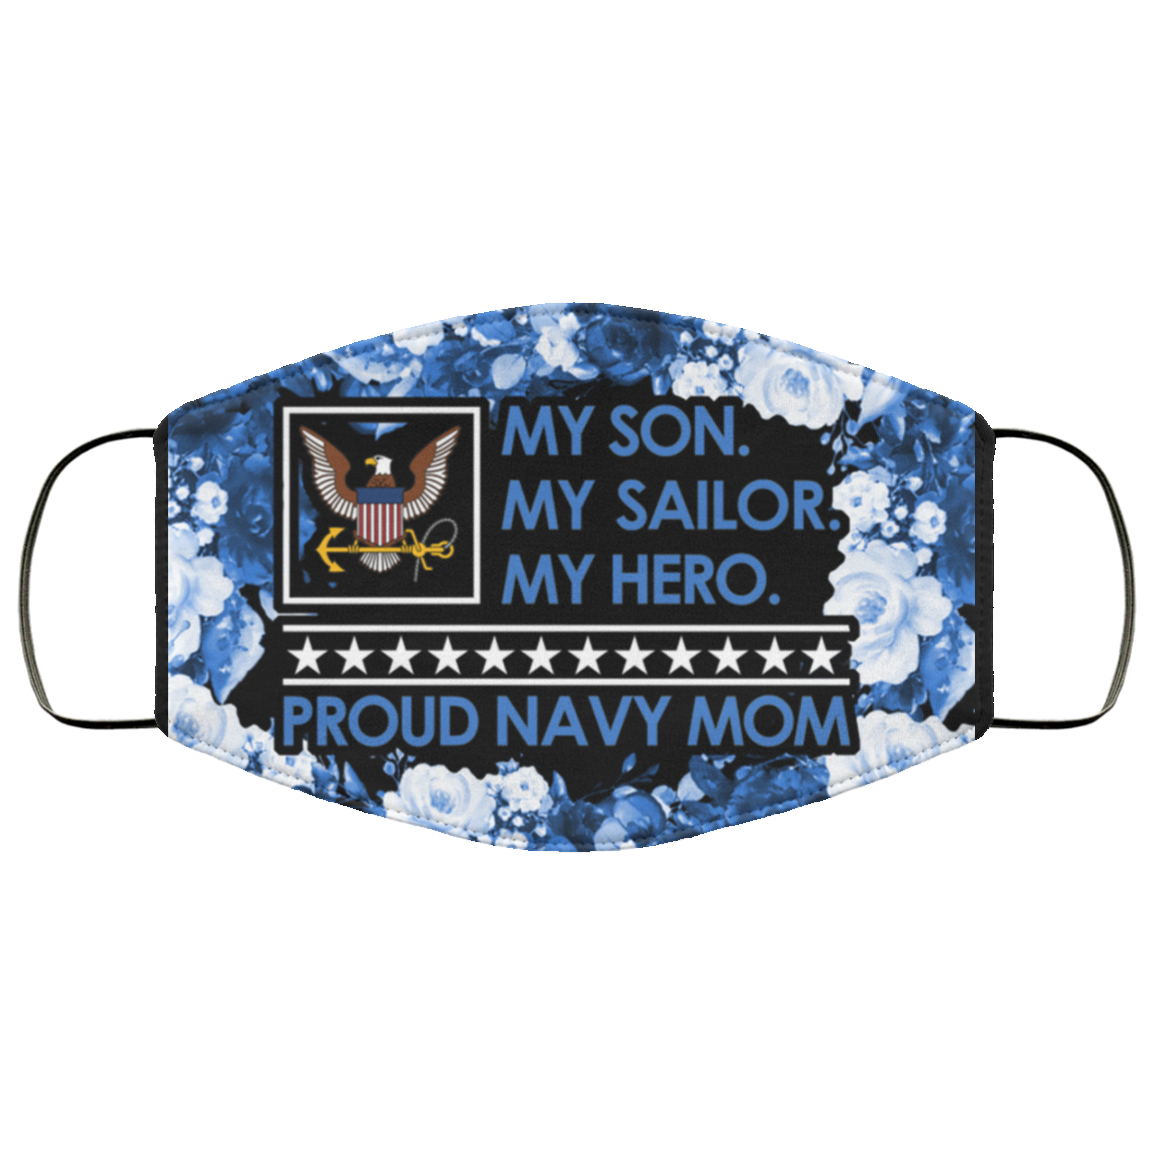 Proud Navy Mom Face Mask - My Son My Sailor My Hero